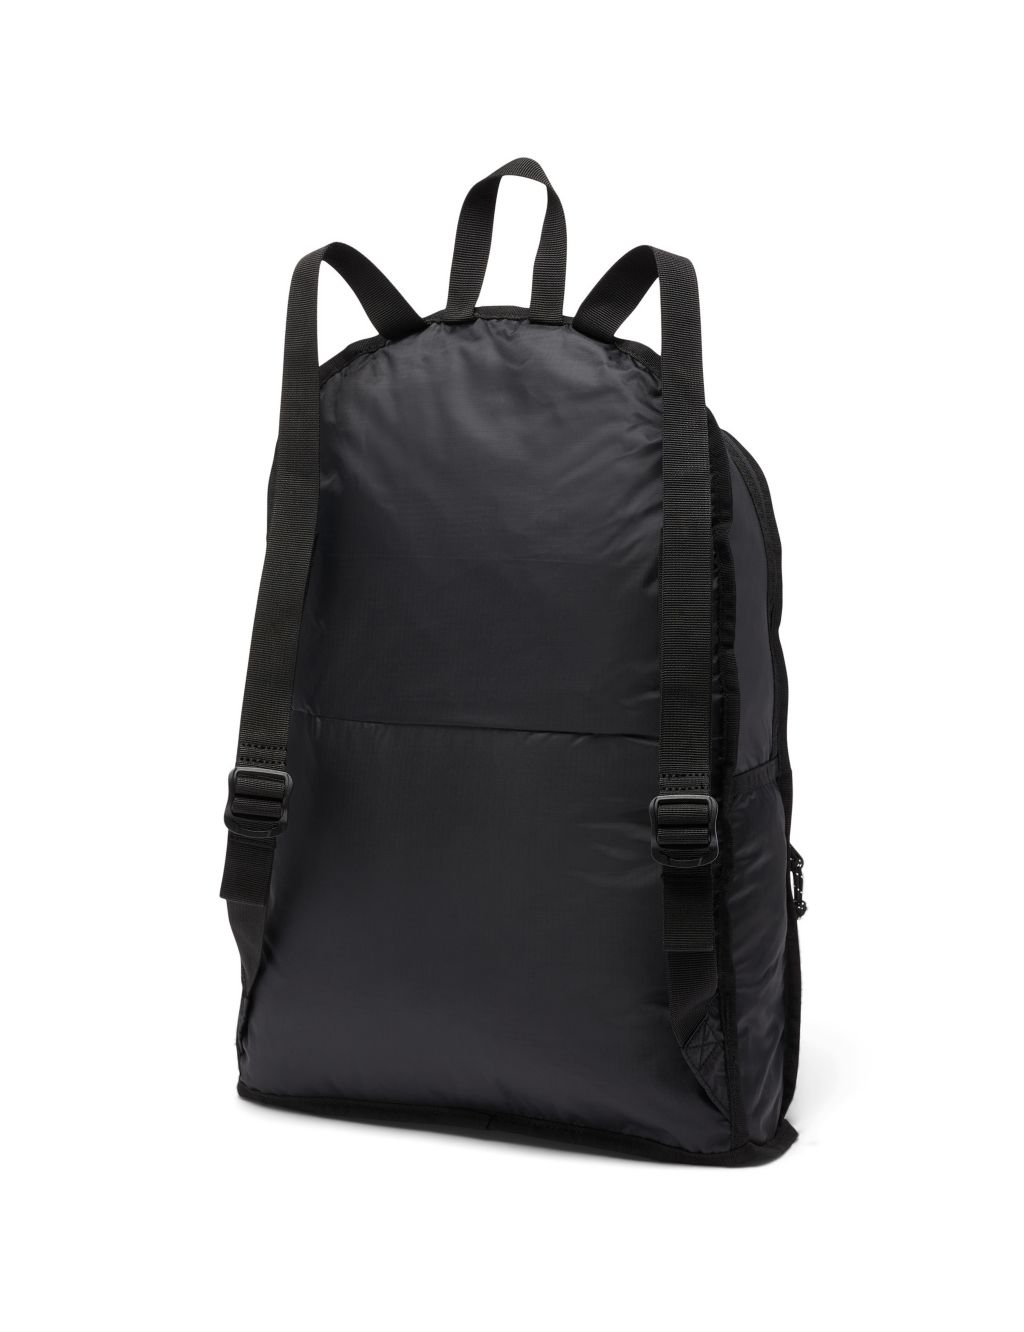 Lightweight Packable II 21L Backpack image 2